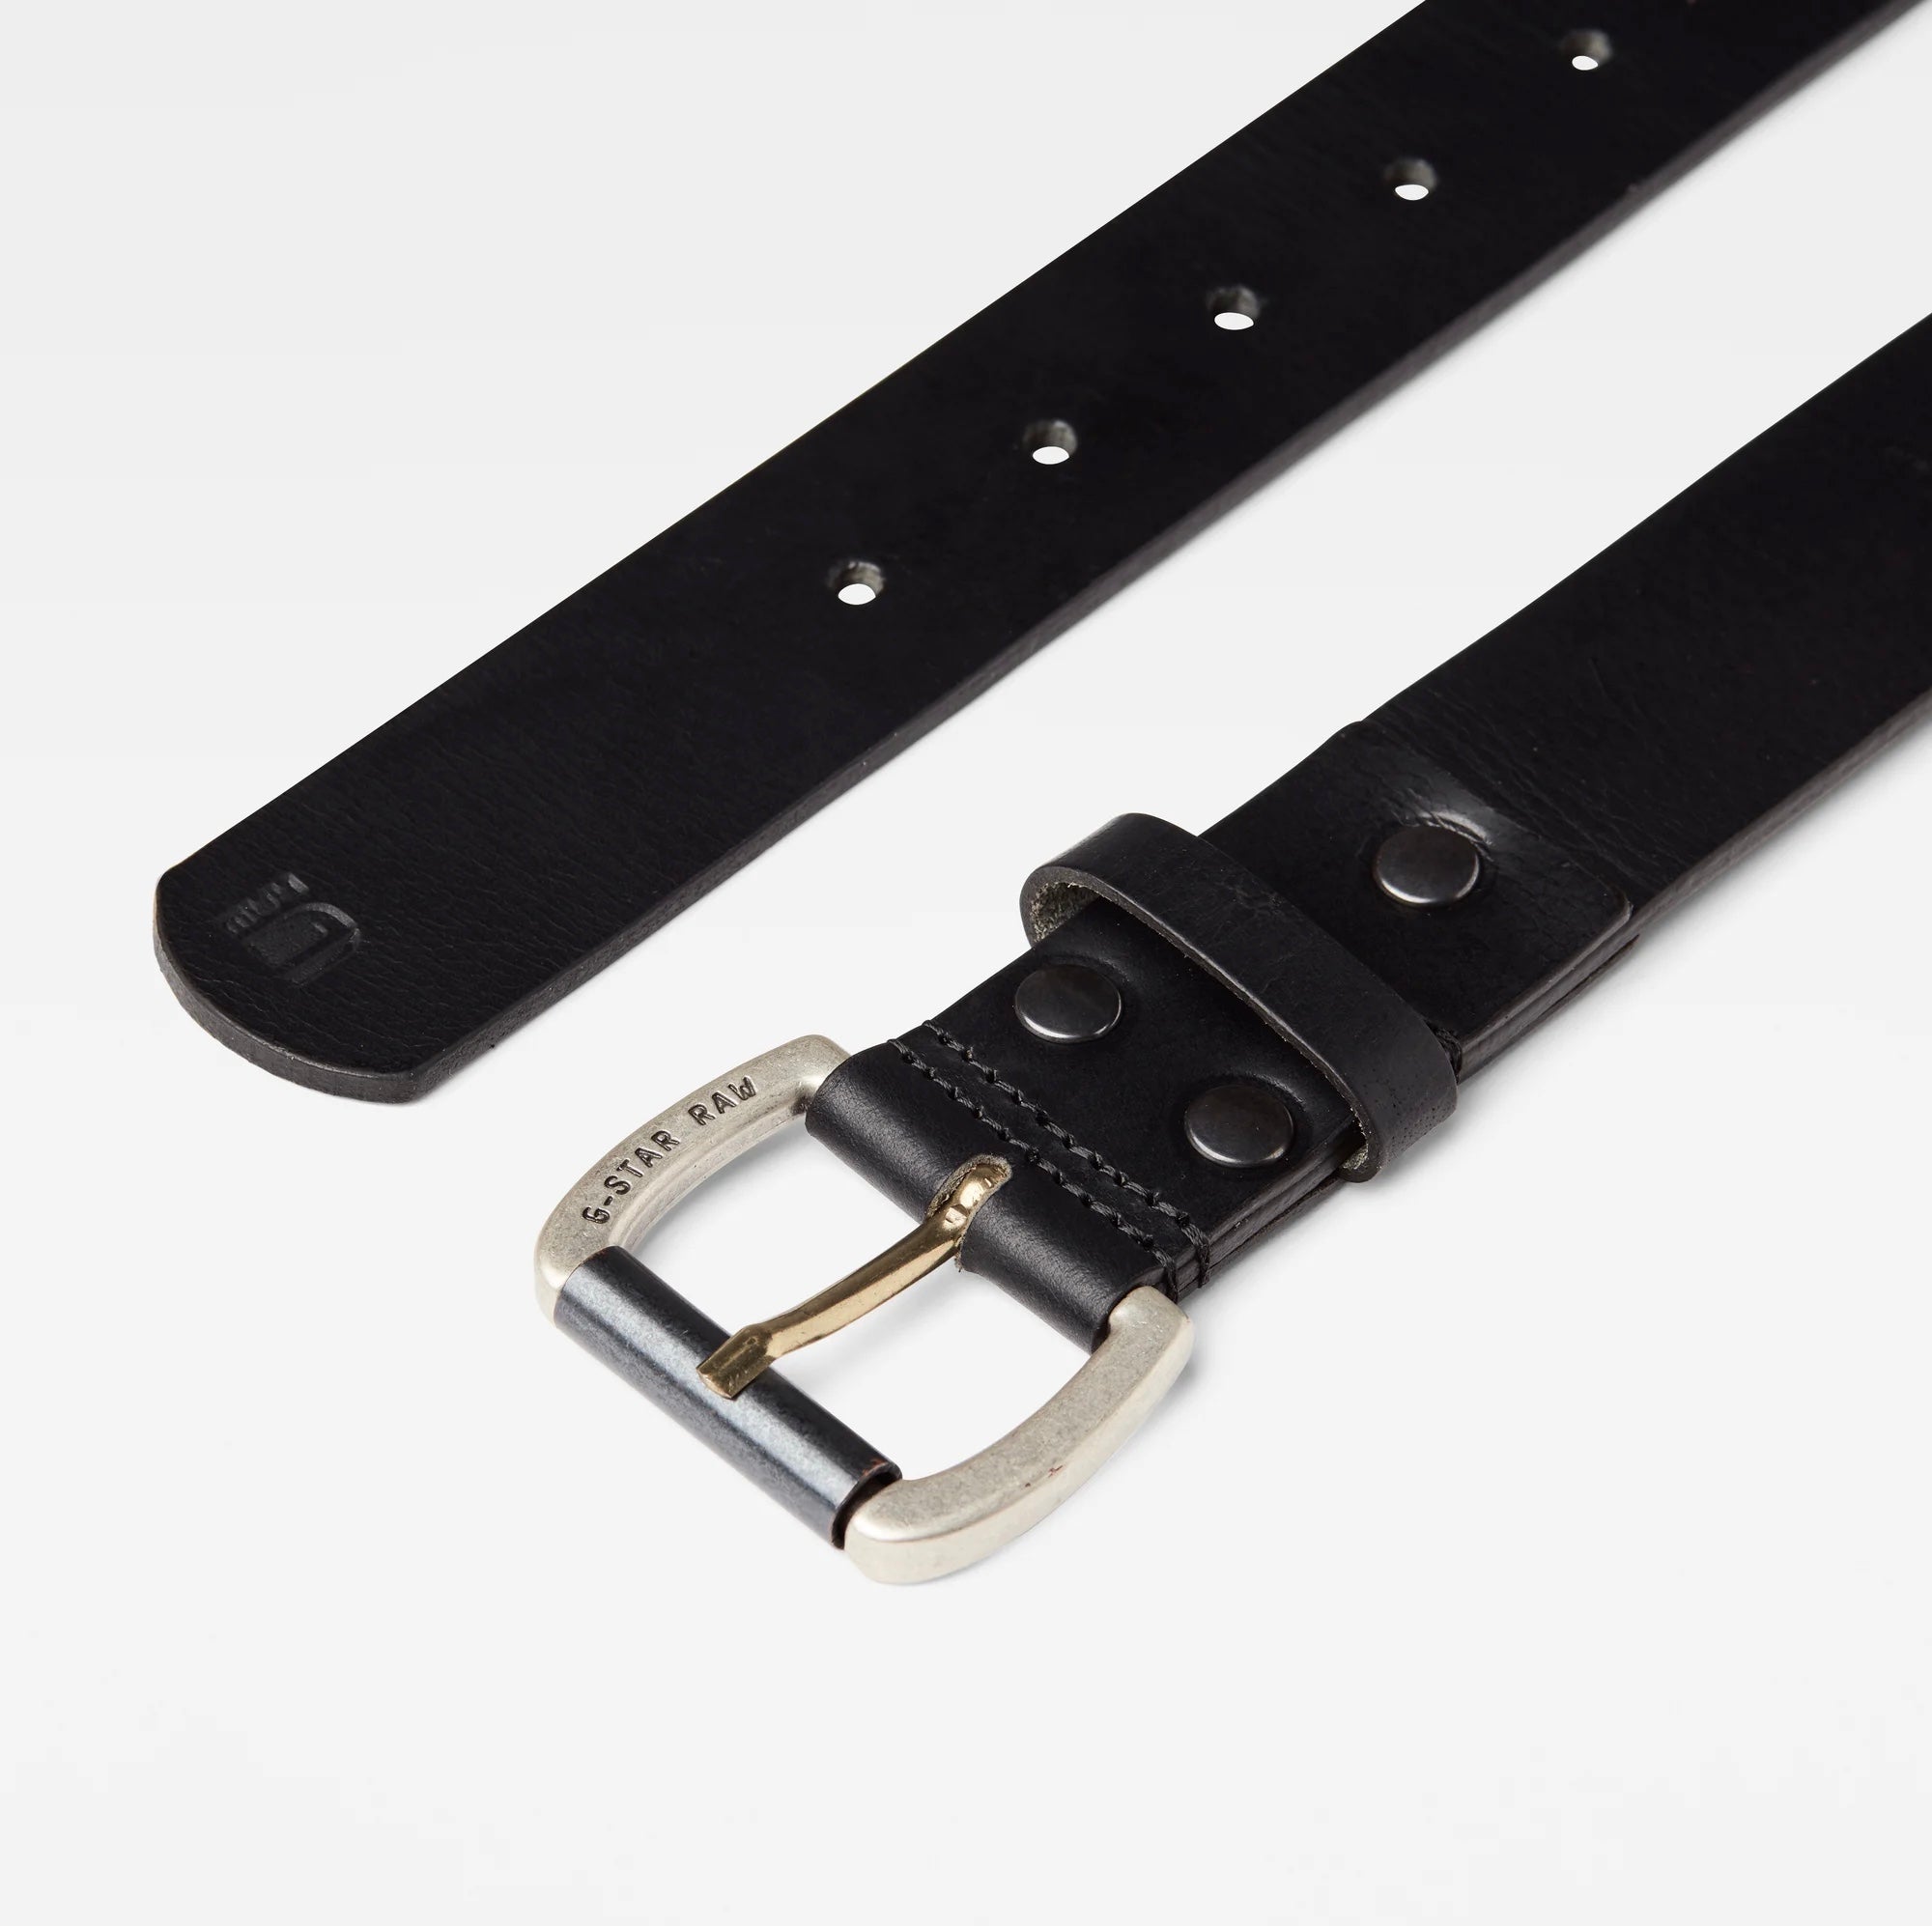 Dast Belt Black Genuine Leather